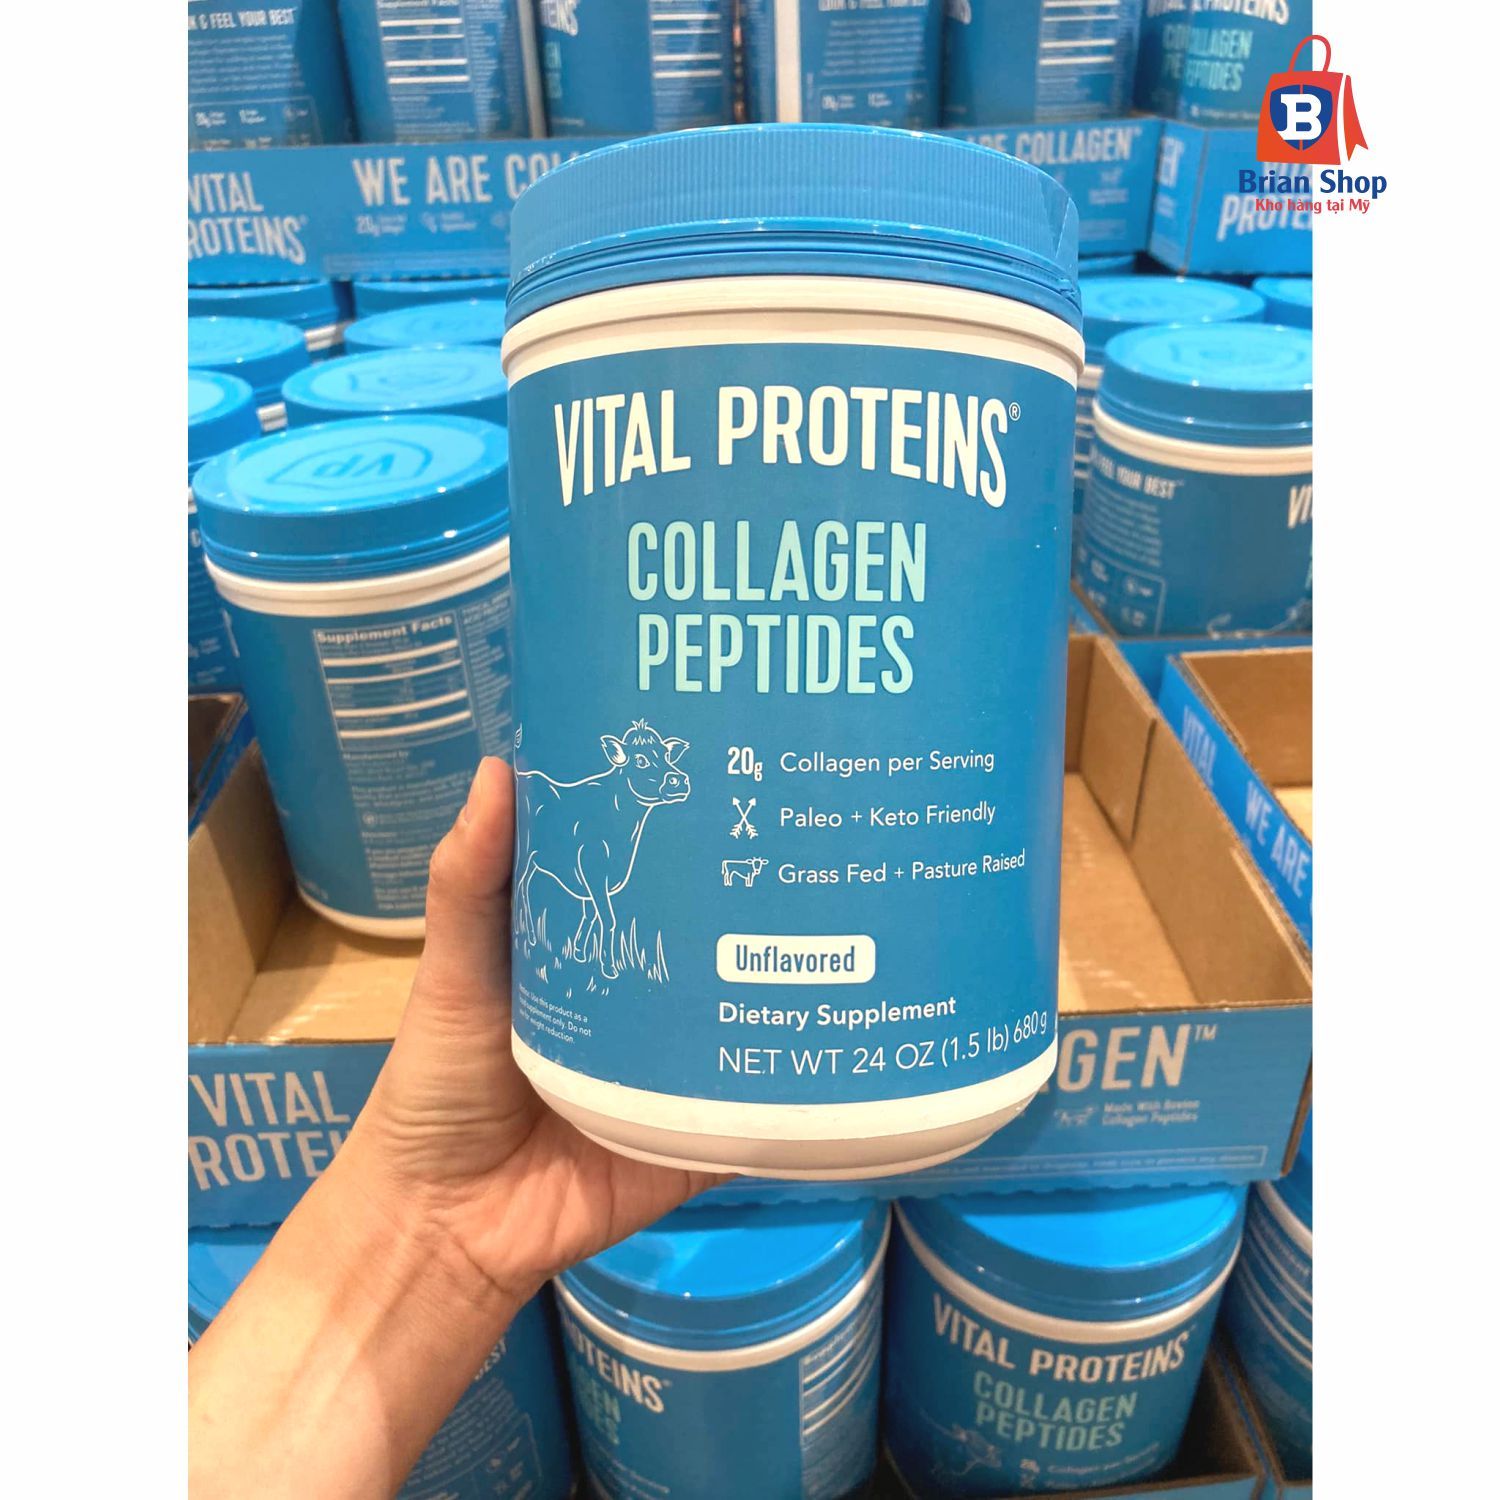  Bột Collagen Thủy Phân Vital Proteins Collagen Peptides [Hộp 680g] 